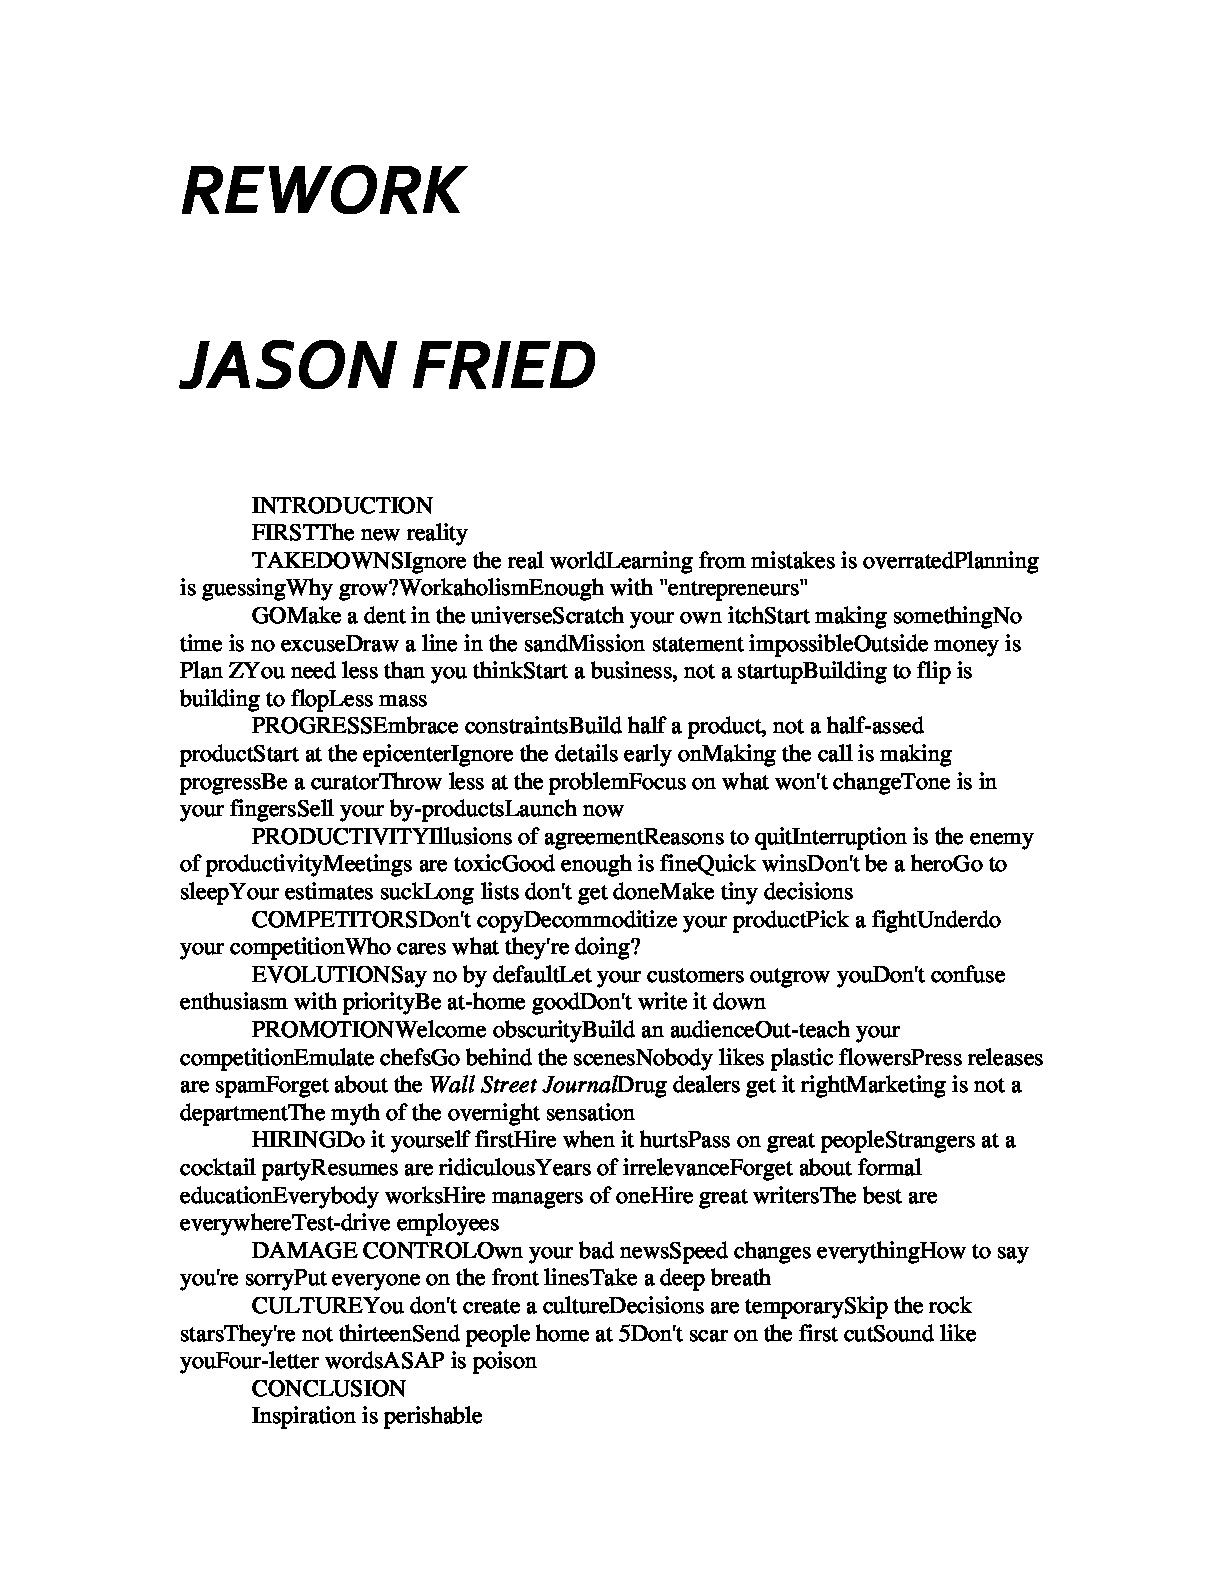 FRIED_Jason_-_Rework